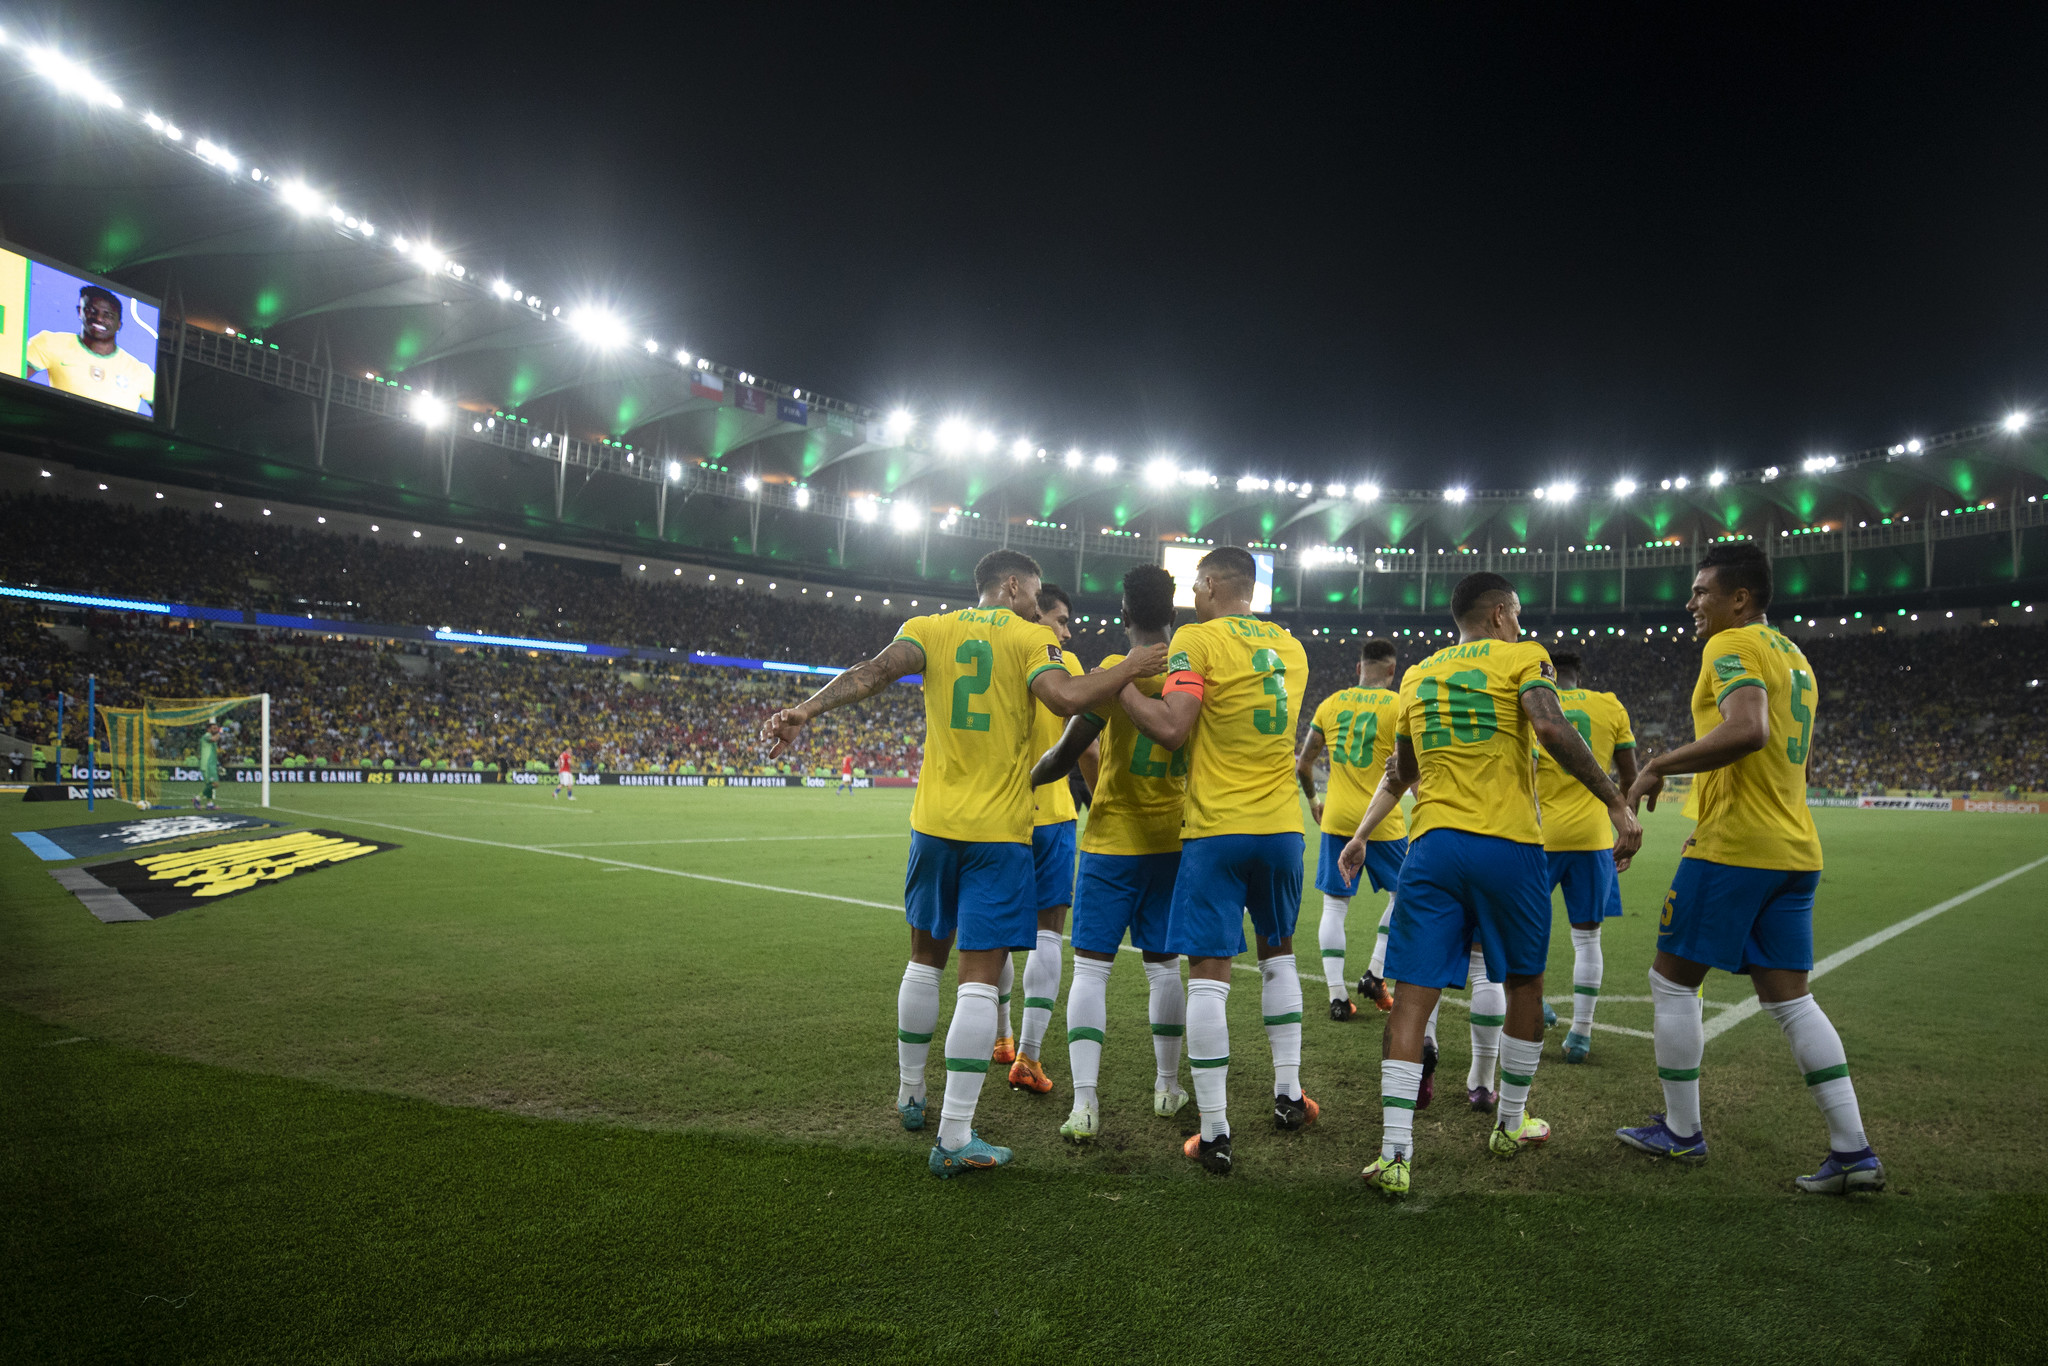 Brasil no Mata-Mata da Copa: Veja Datas dos Jogos Até a Final